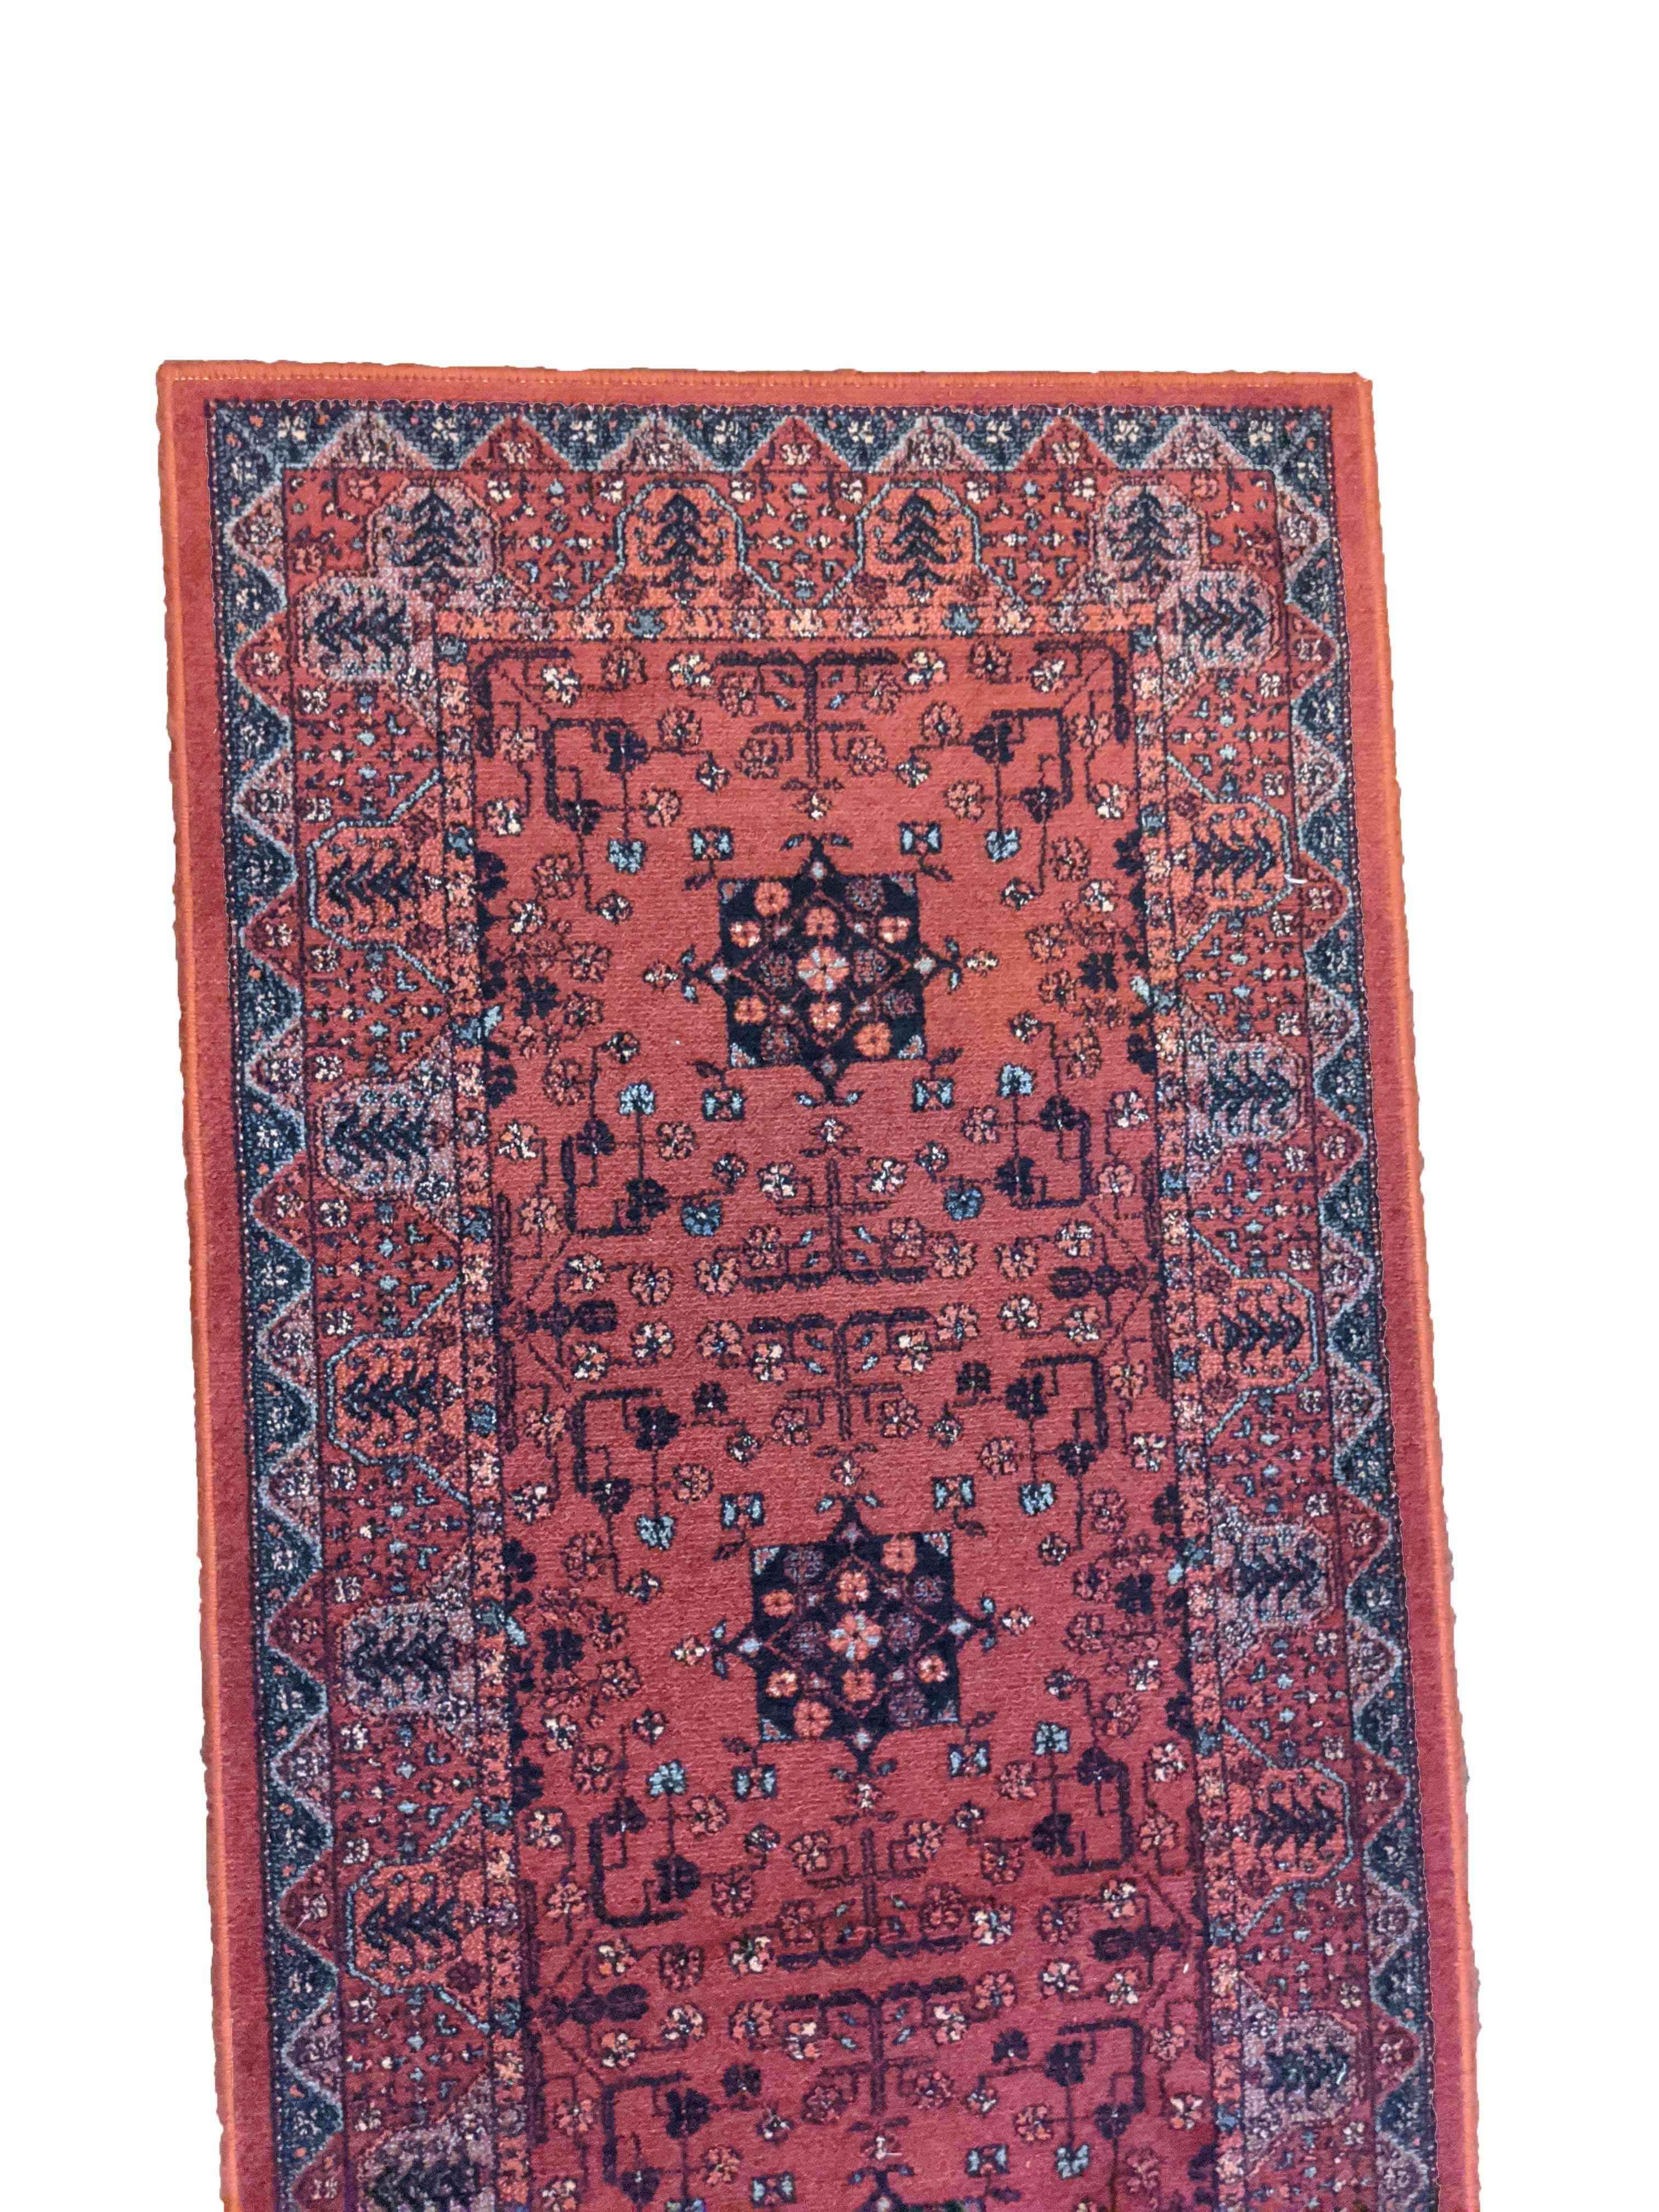 67 x 275 cm Khan mohammadi powerloom Traditional Red Rug - Rugmaster